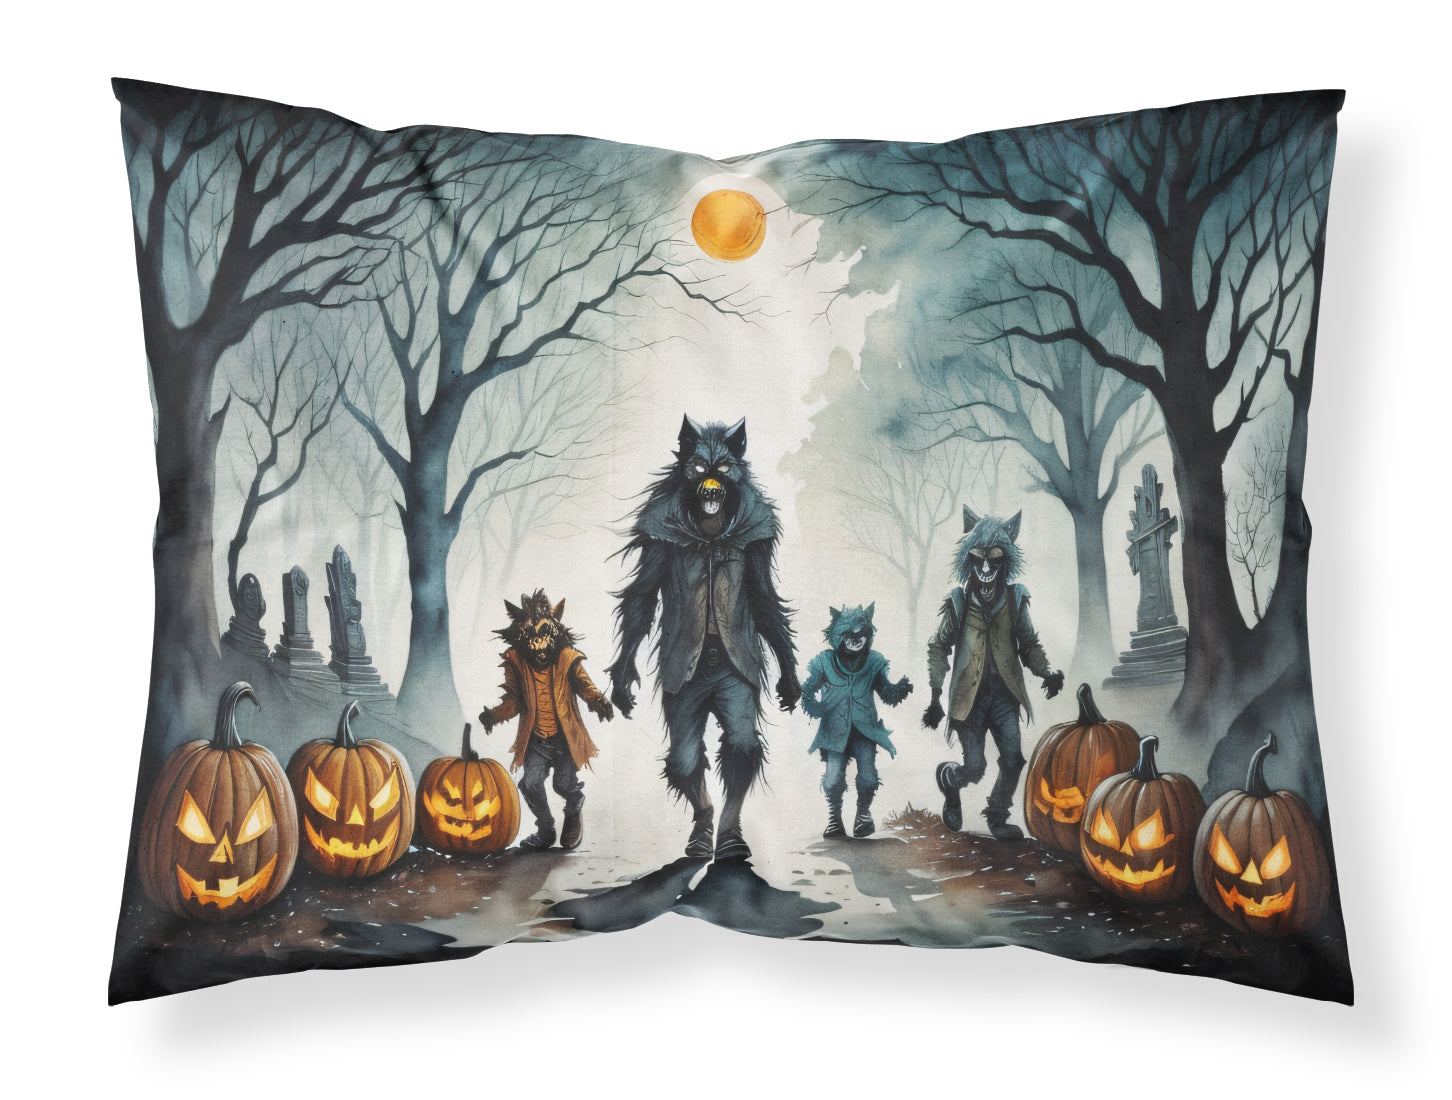 Buy this Werewolves Spooky Halloween Fabric Standard Pillowcase